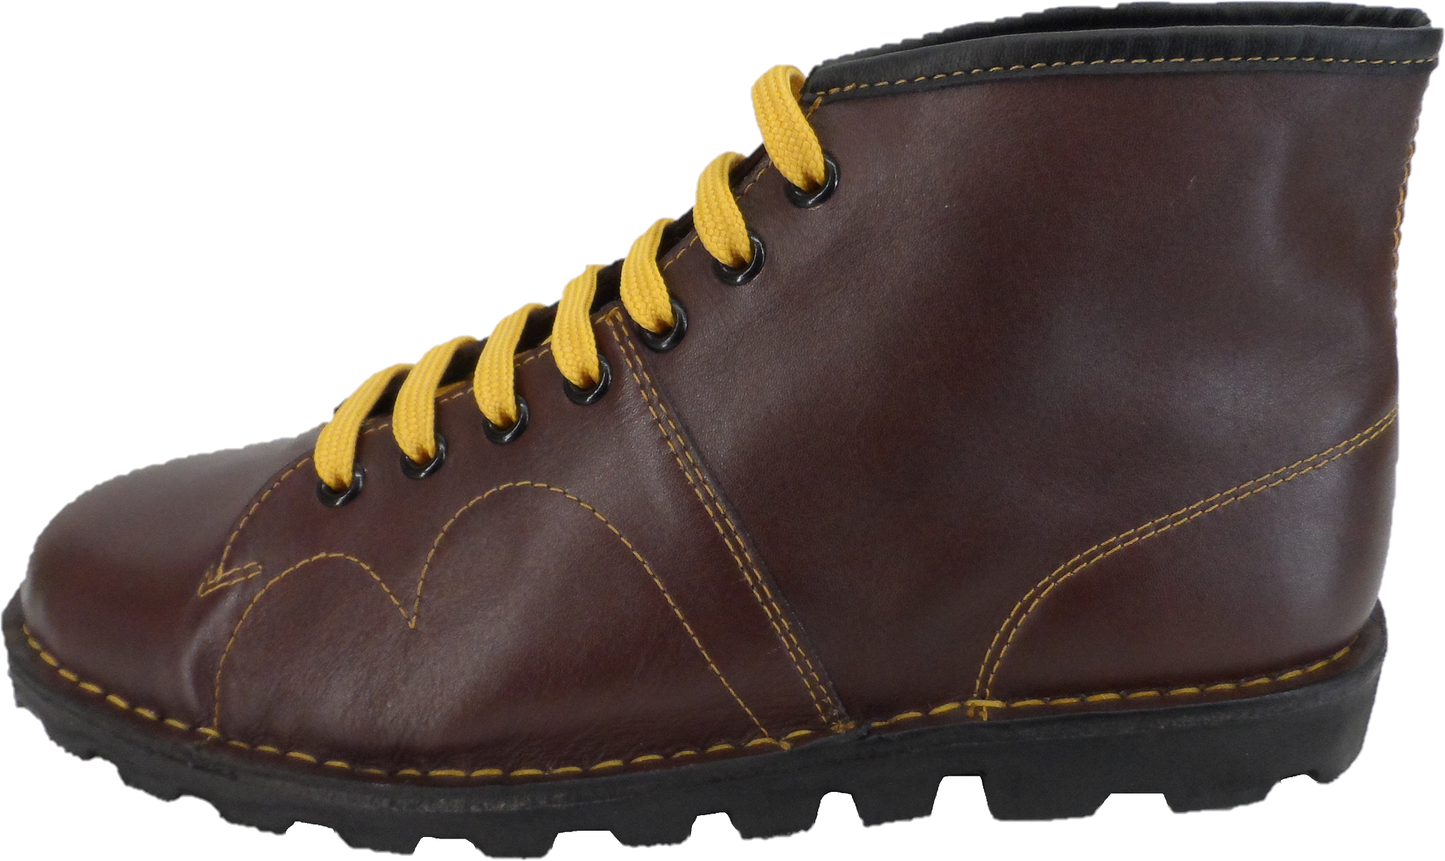 Ikon Original 1970's Style Oxblood Leather Monkey Boots